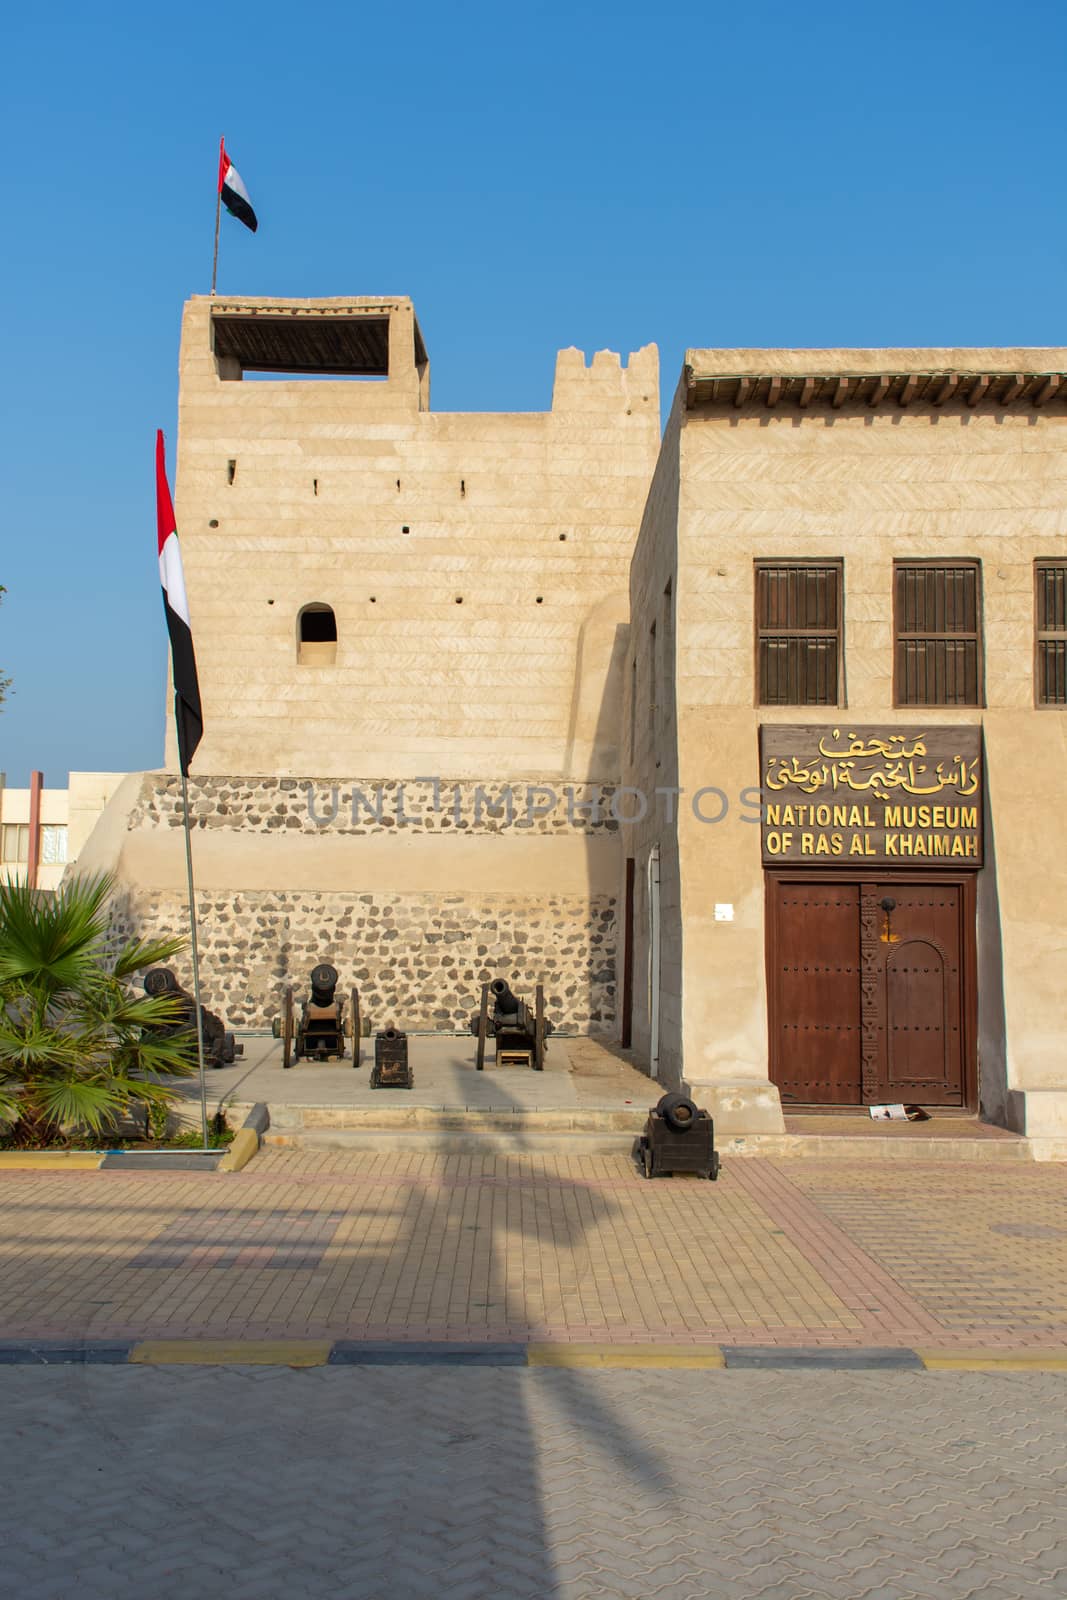 "Ras al Khaimah, Ras al Khaimah/United Arab Emirates - 9/28/2018: Portrait view of entrance of the Ras al Khaimah Museum in the morning sun with flags blowing."